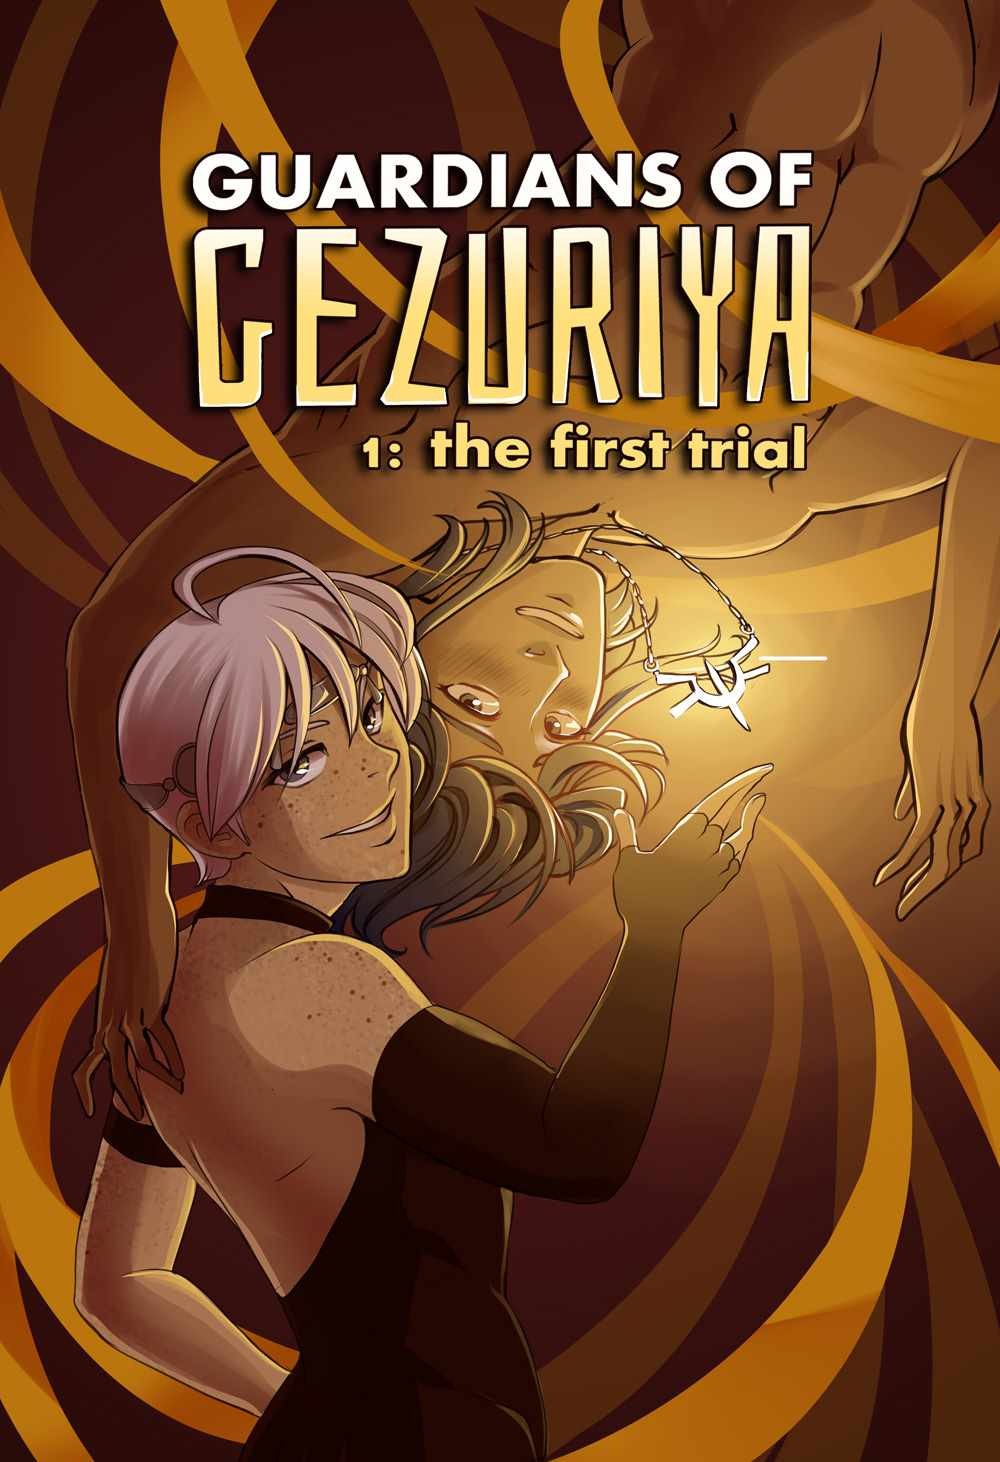 Guardians of Gezuriya Chapter 1